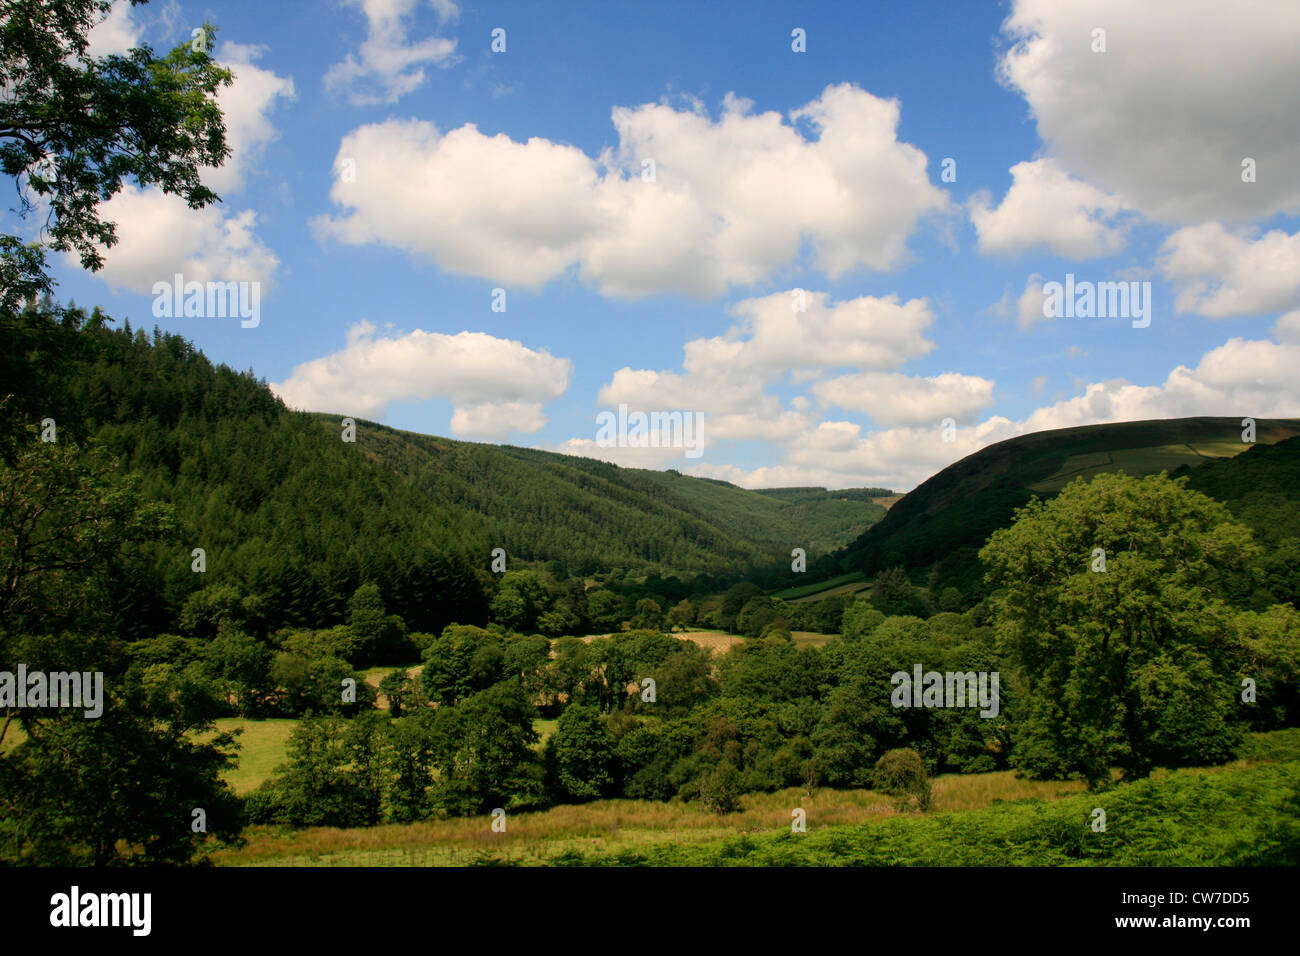 Vallée de la campagne près de Llanwrtyd Wells, Powys, Wales Banque D'Images